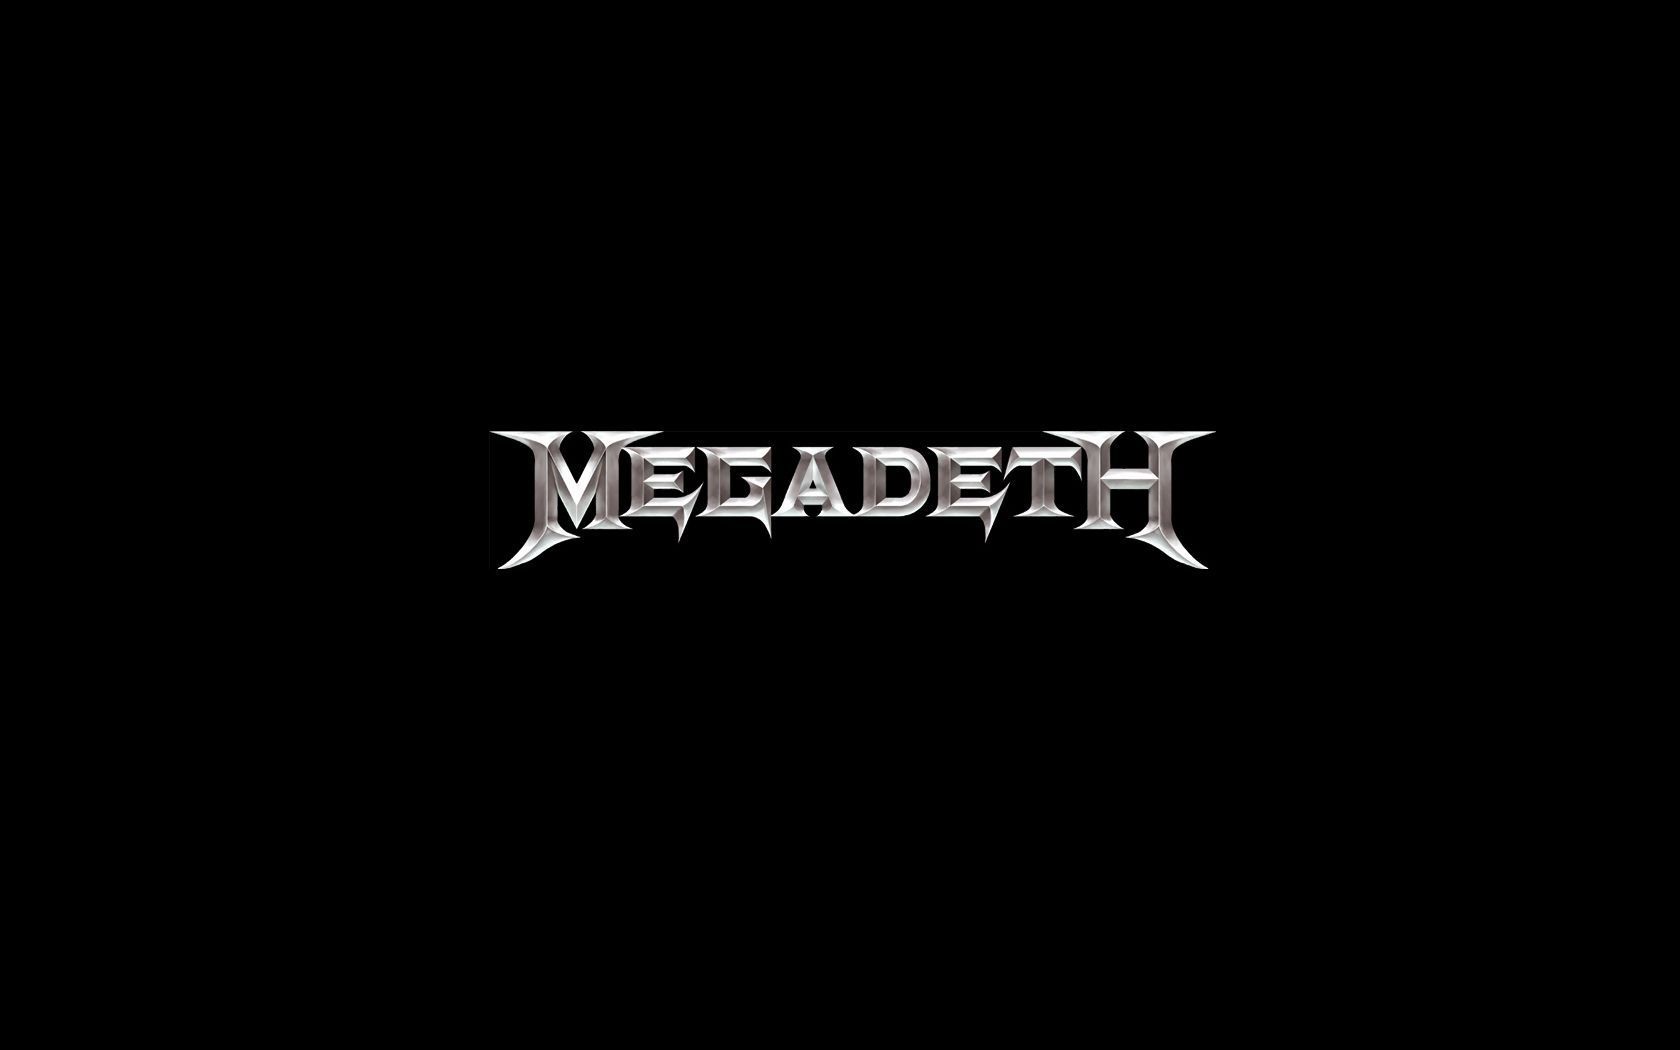 Megadeth wallpaper by leonardi17 on DeviantArt